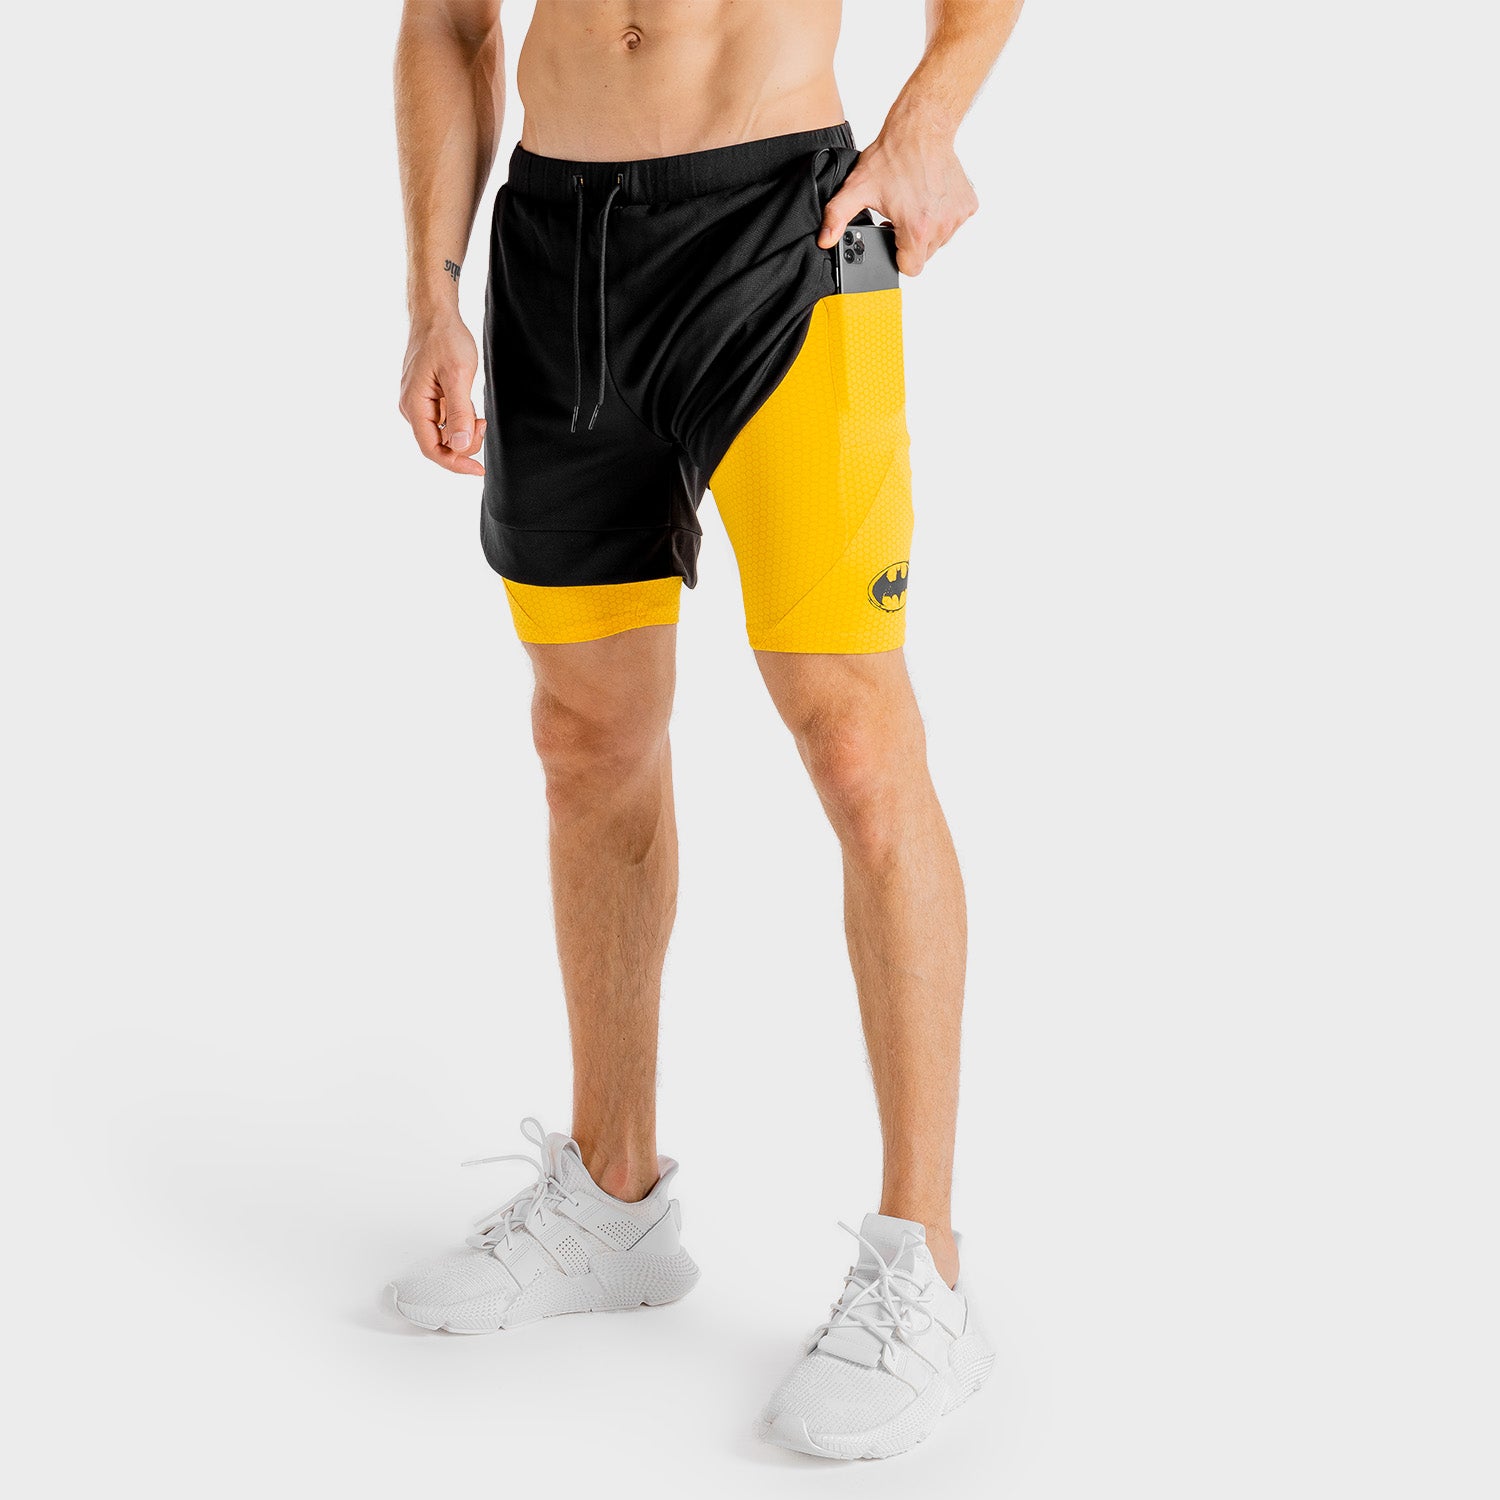 squatwolf-gym-wear-batman-gym-shorts-black-workout-short-for-men